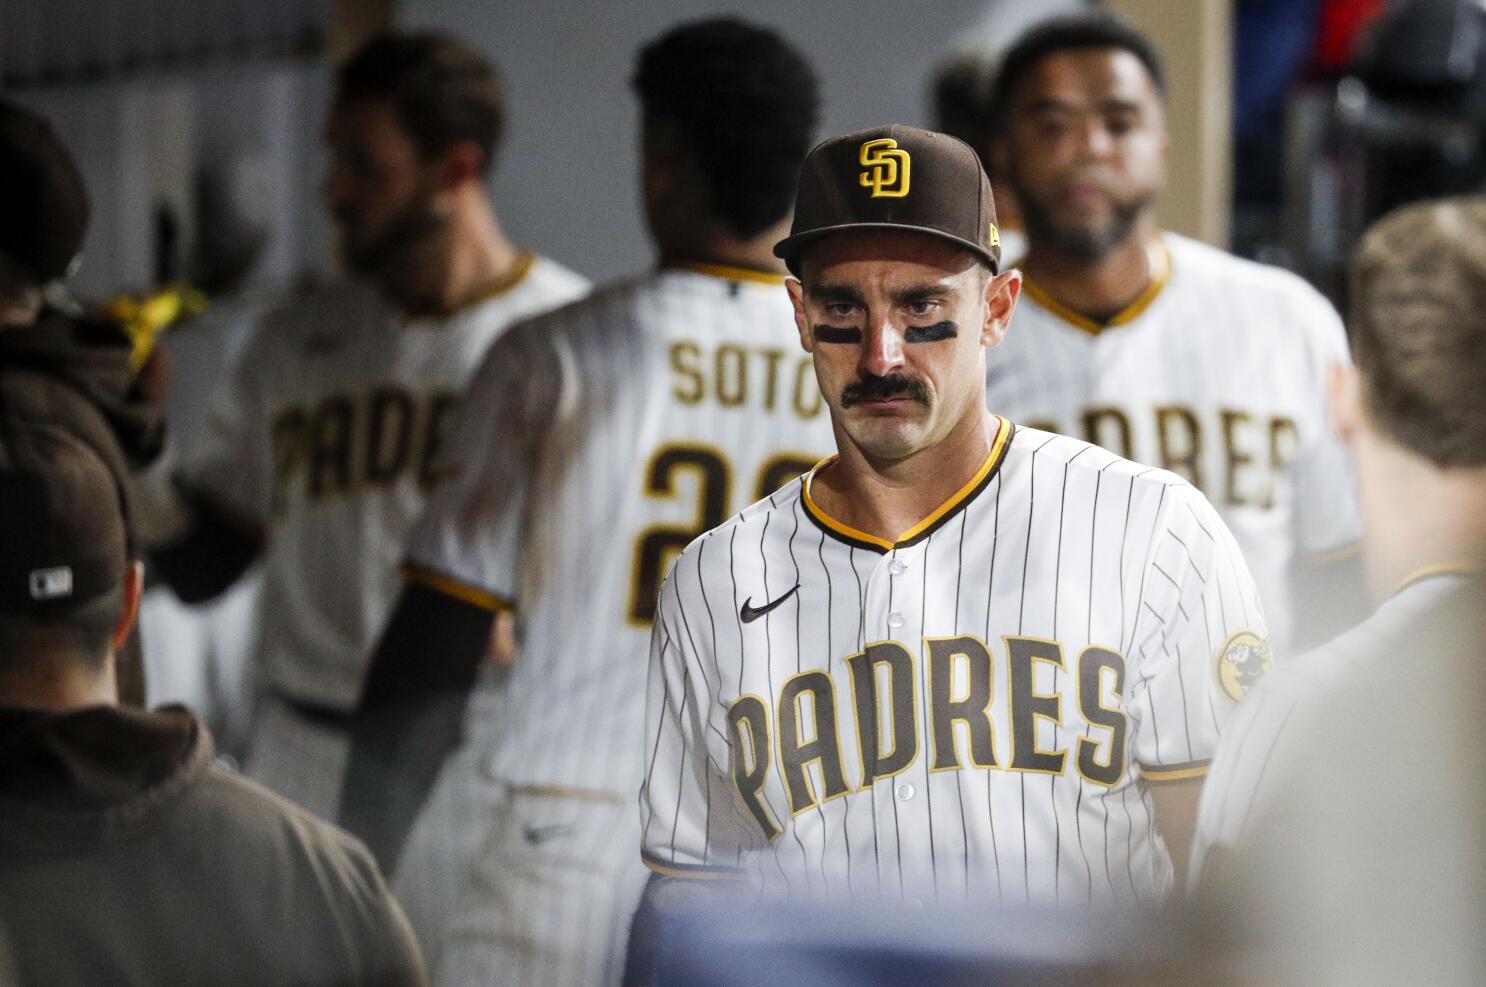 Padres end scoreless streak at 30 innings - The San Diego Union-Tribune